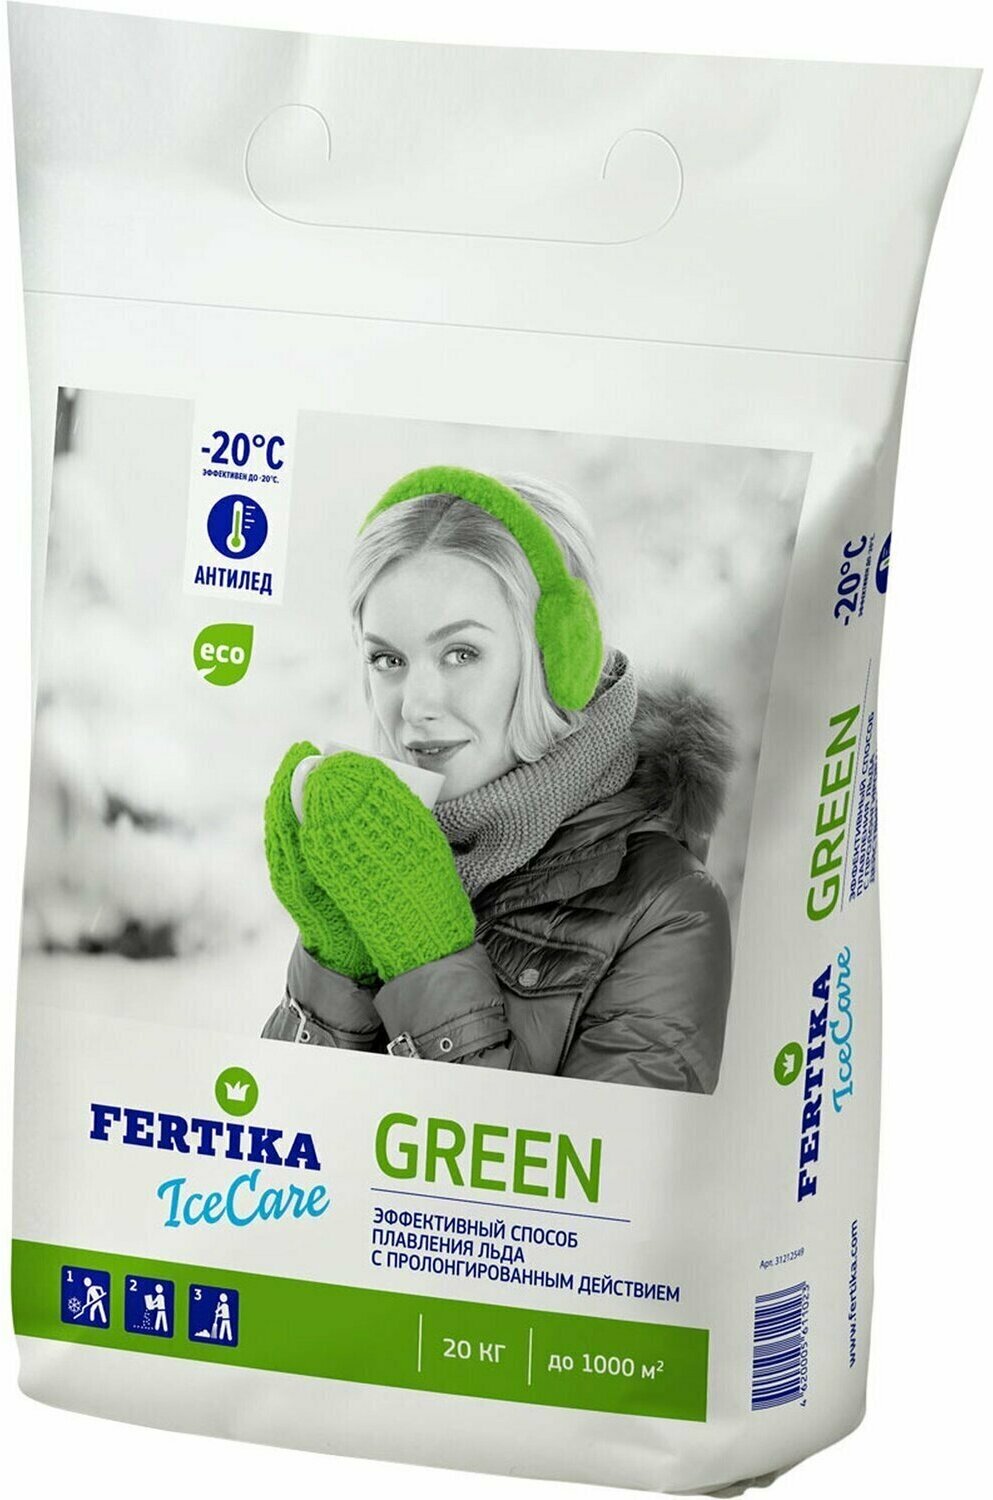 Противогололёдный реагент Fertika IceCare Green -20С 20 кг